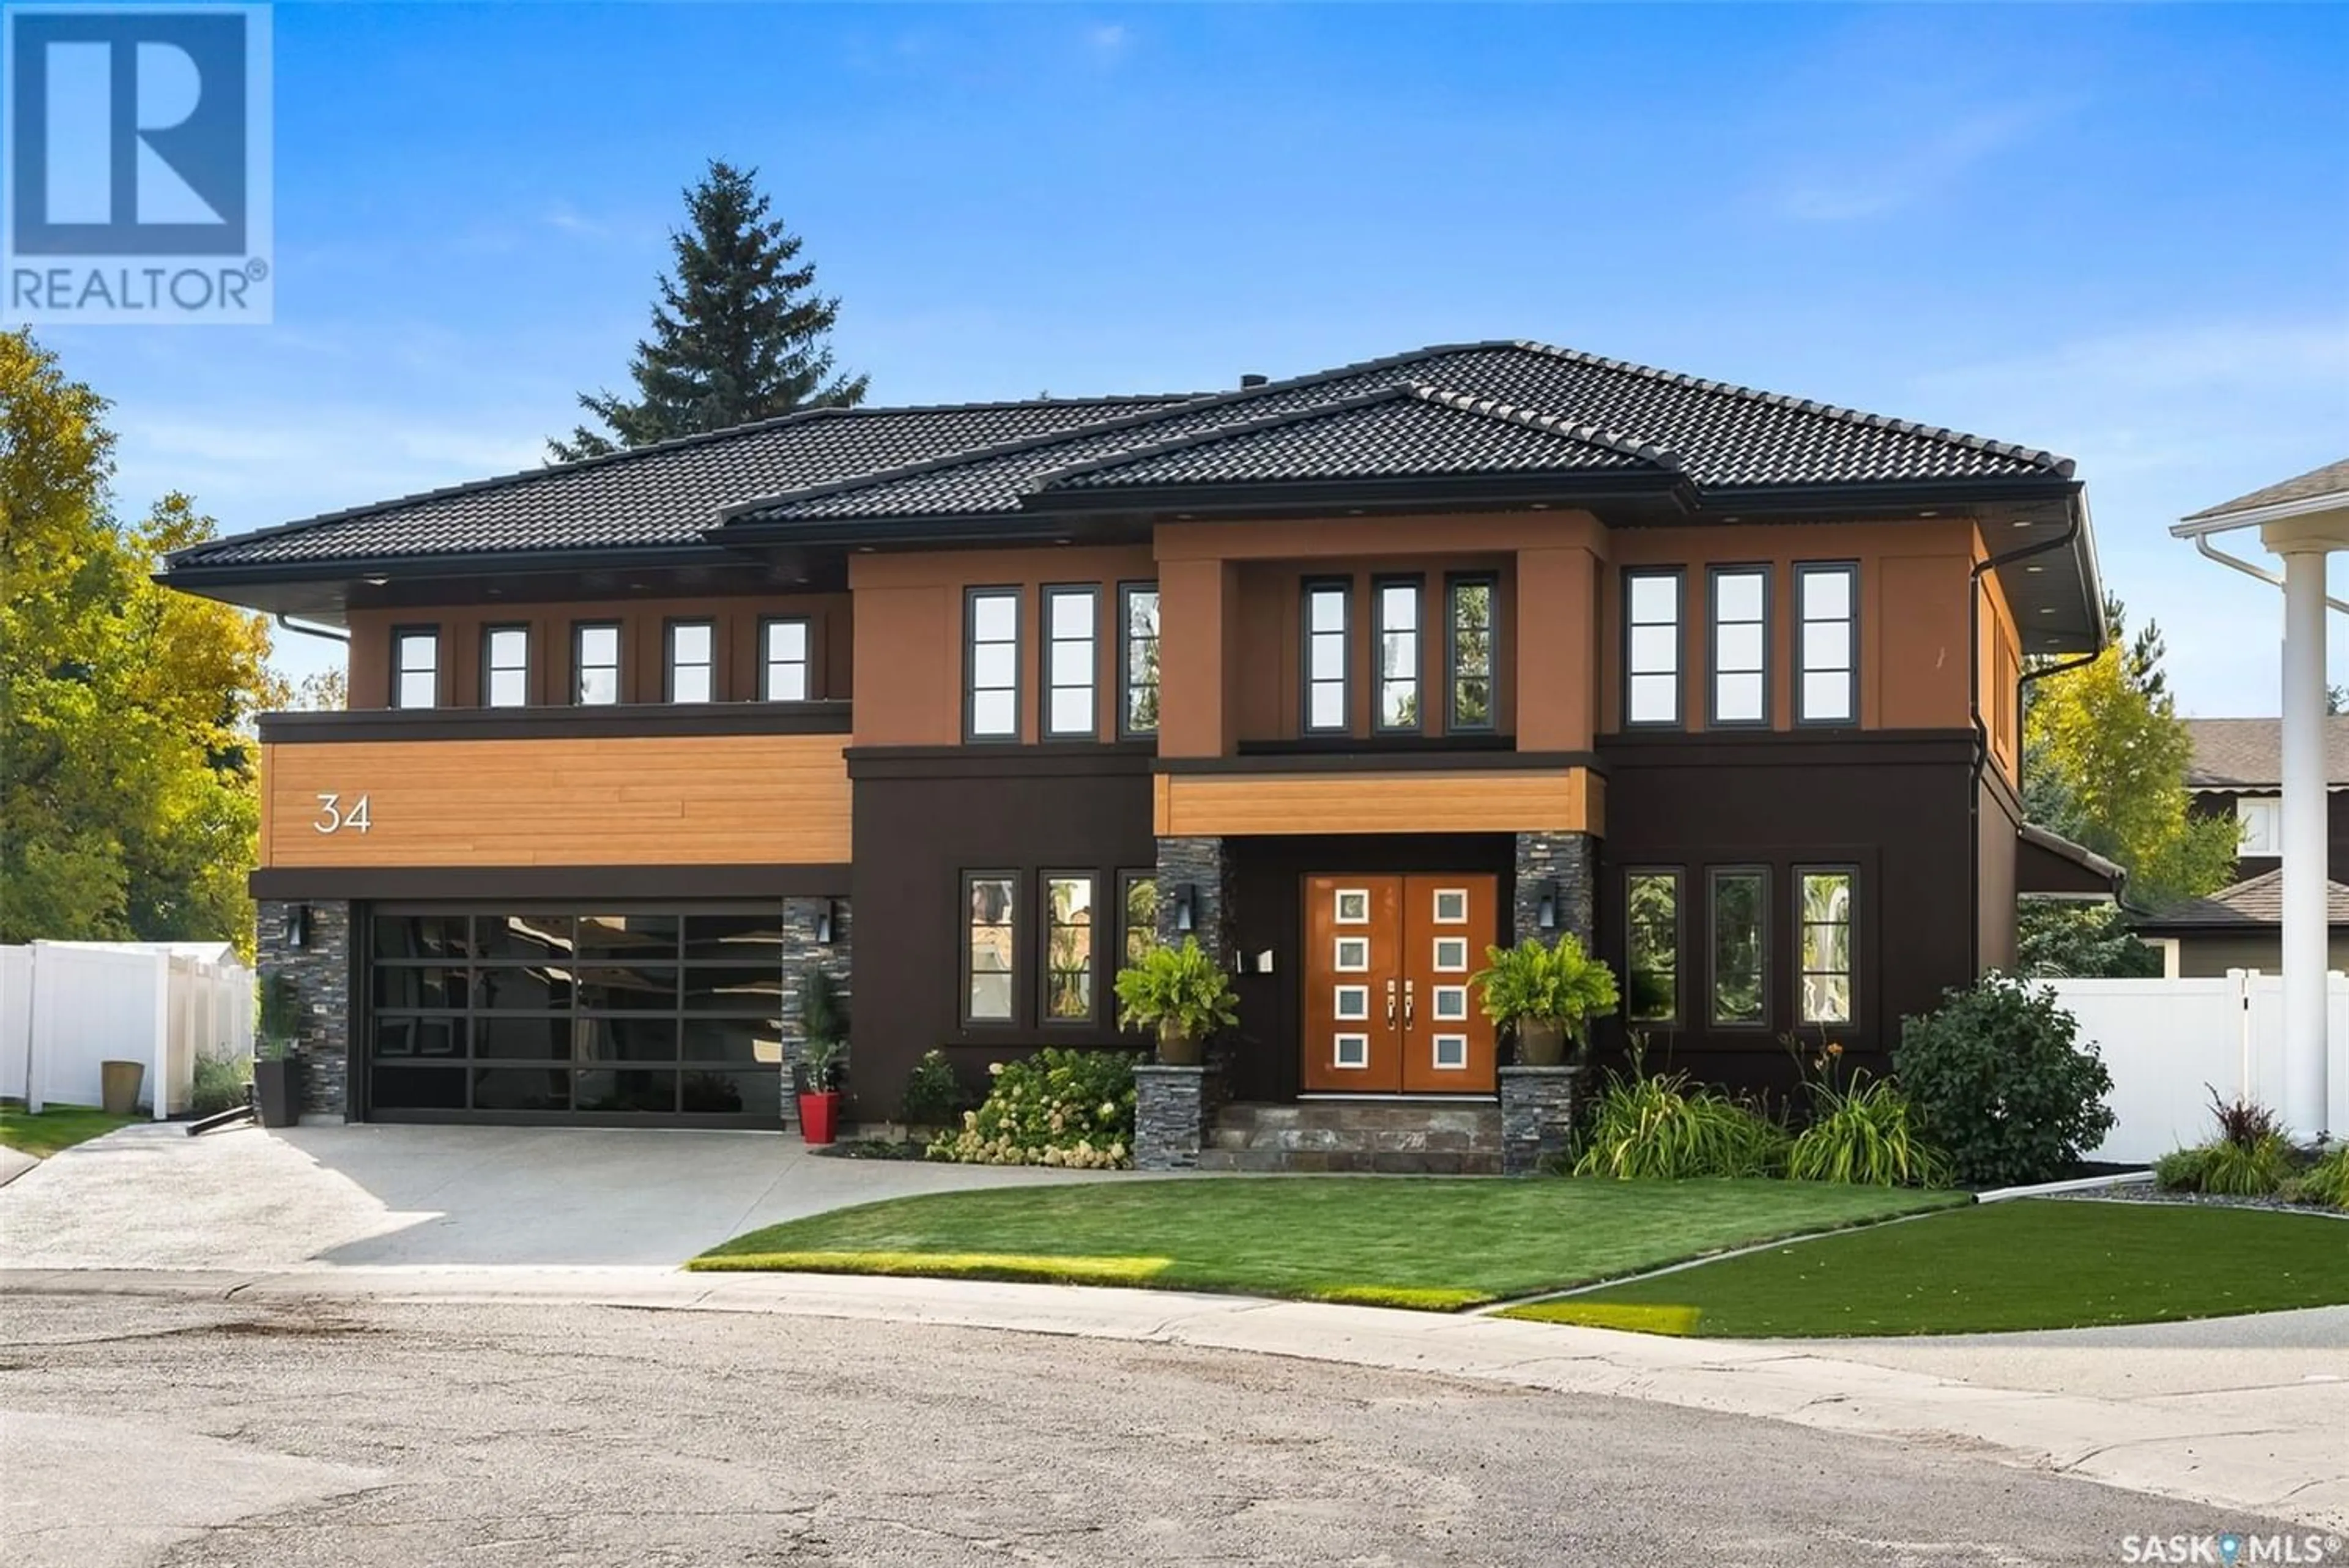 Home with brick exterior material for 34 LESLIE PLACE, Regina Saskatchewan S4S6R2